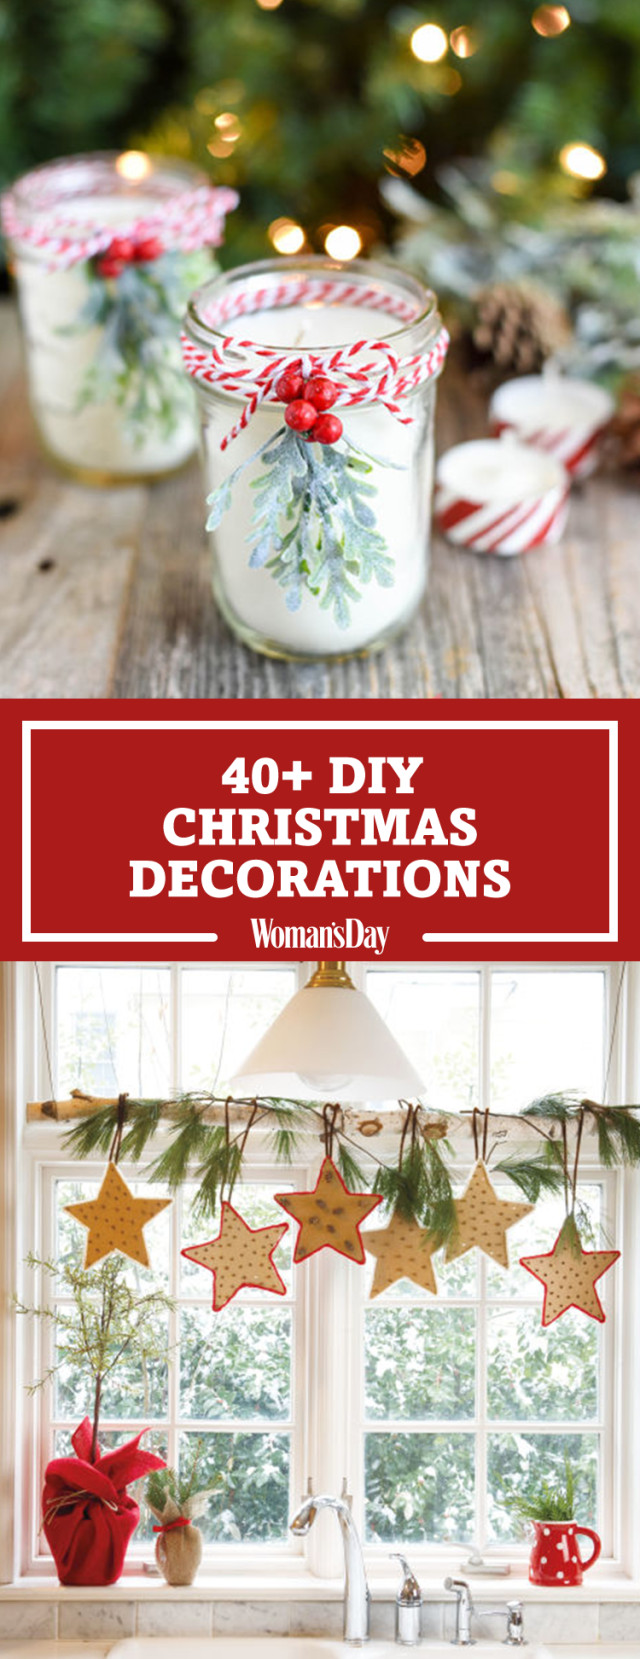 DIY Christmas Decor Ideas
 47 Easy DIY Christmas Decorations Homemade Ideas for